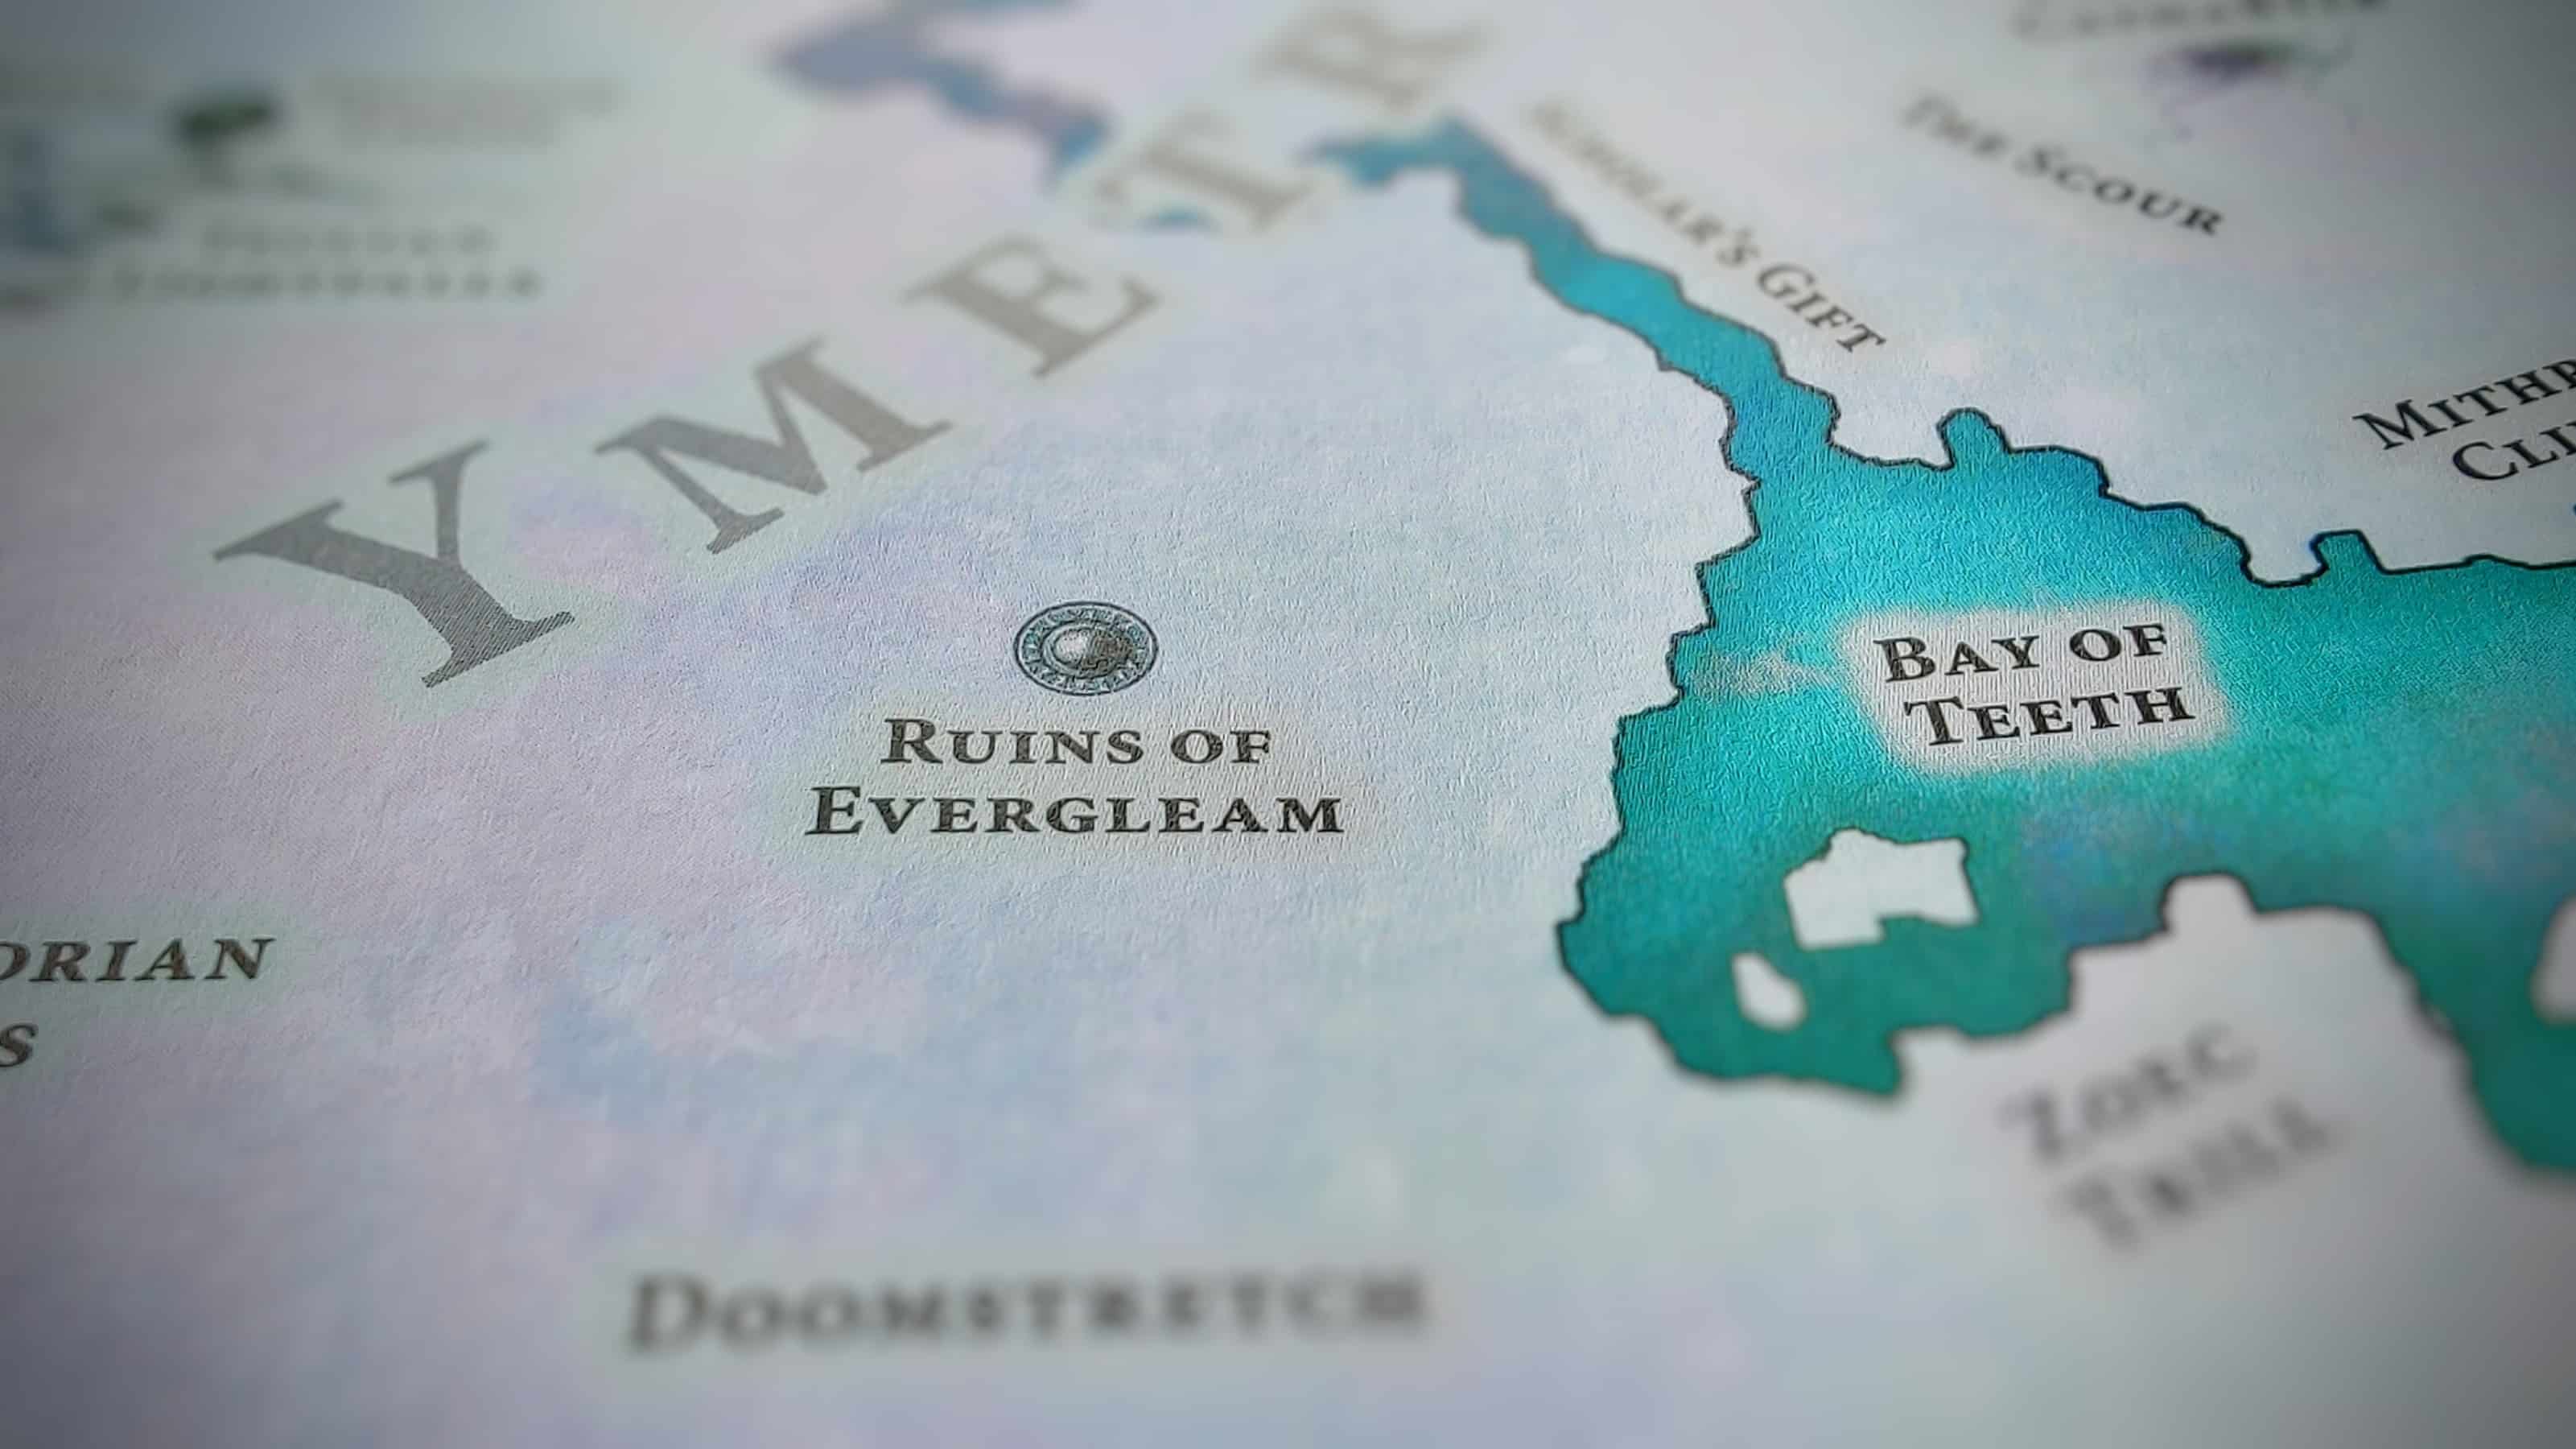 Ruins of Evergleam